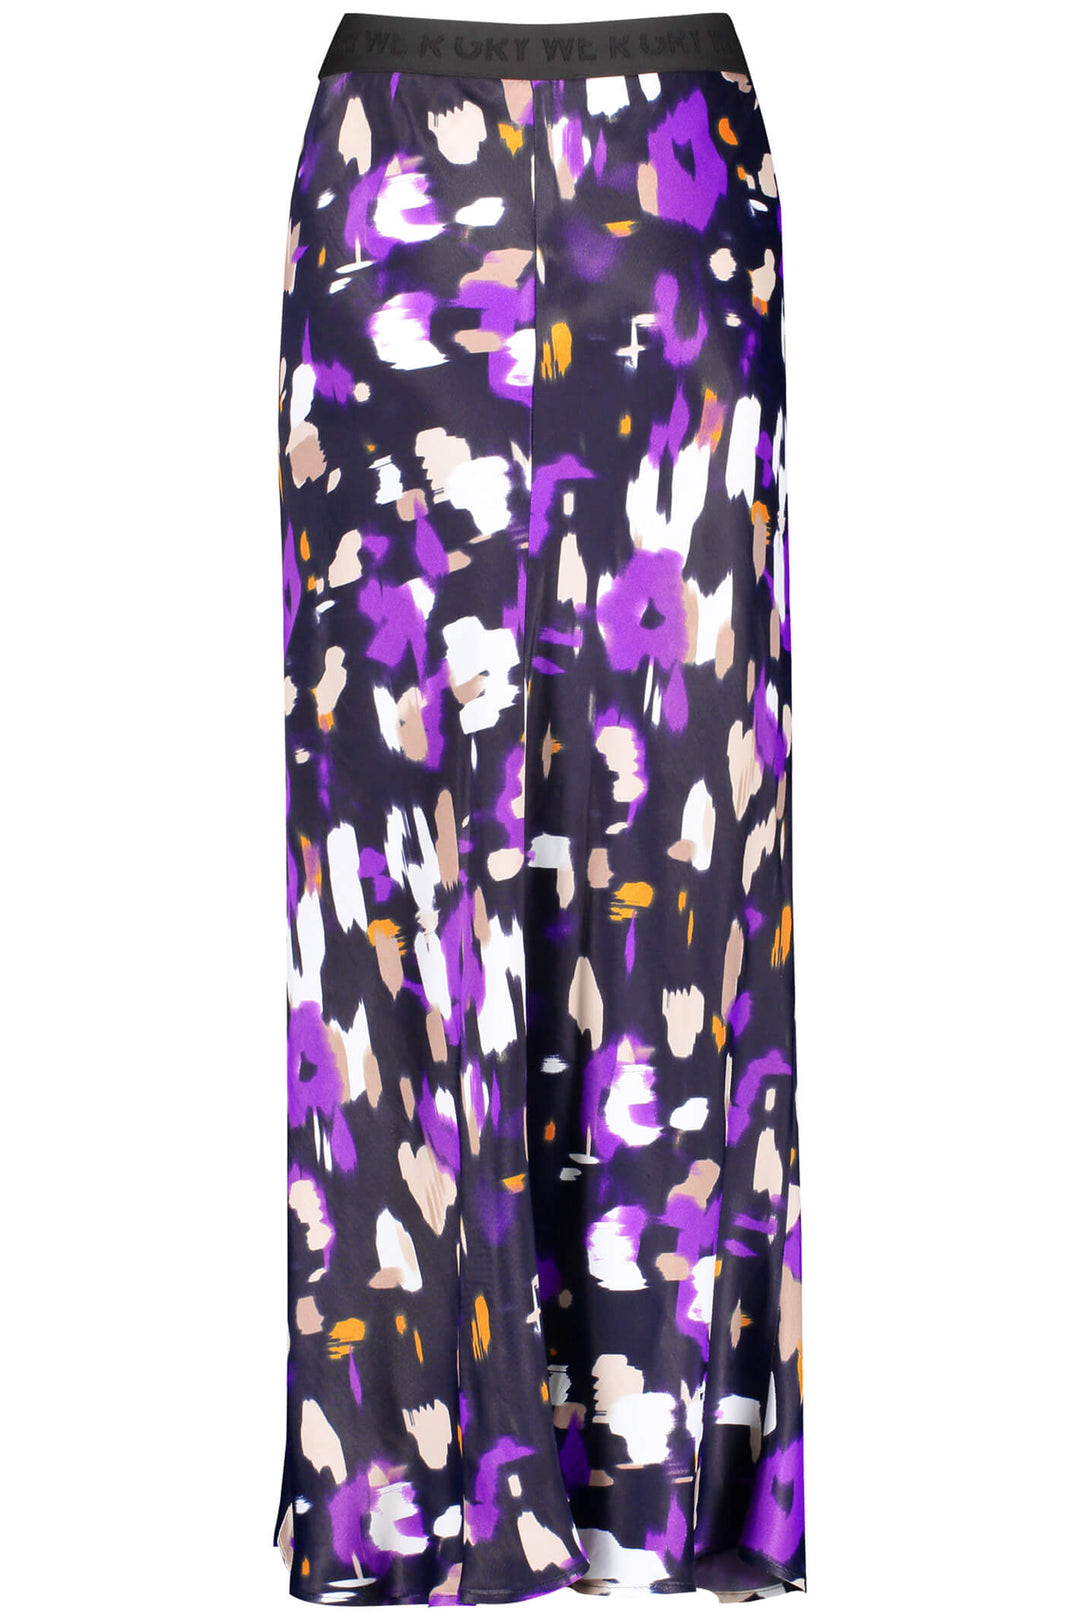 Gerry Weber 111001-66631 Black Purple Print Pull-On Midi Length Skirt - Dotique Chesterfield